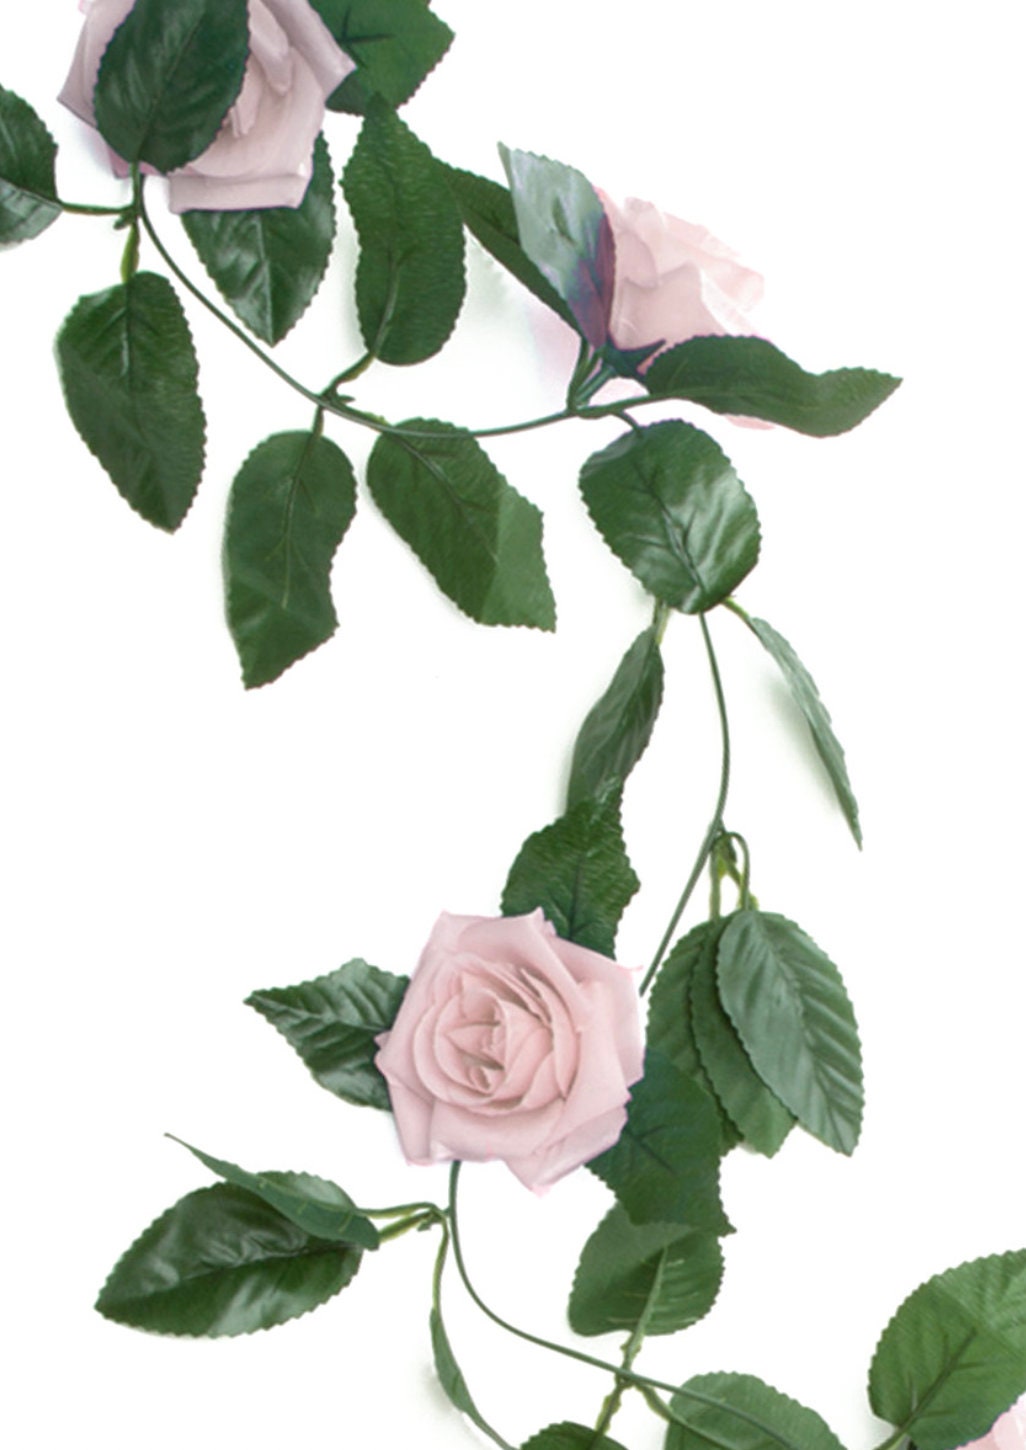 FOUR 6 FT. Hanging Blush Rose Garlands, Spring Decor, Easter Floral Arrangements, Wedding Ceremony, Outdoor Hanging Flowers, Pink Faux Roses